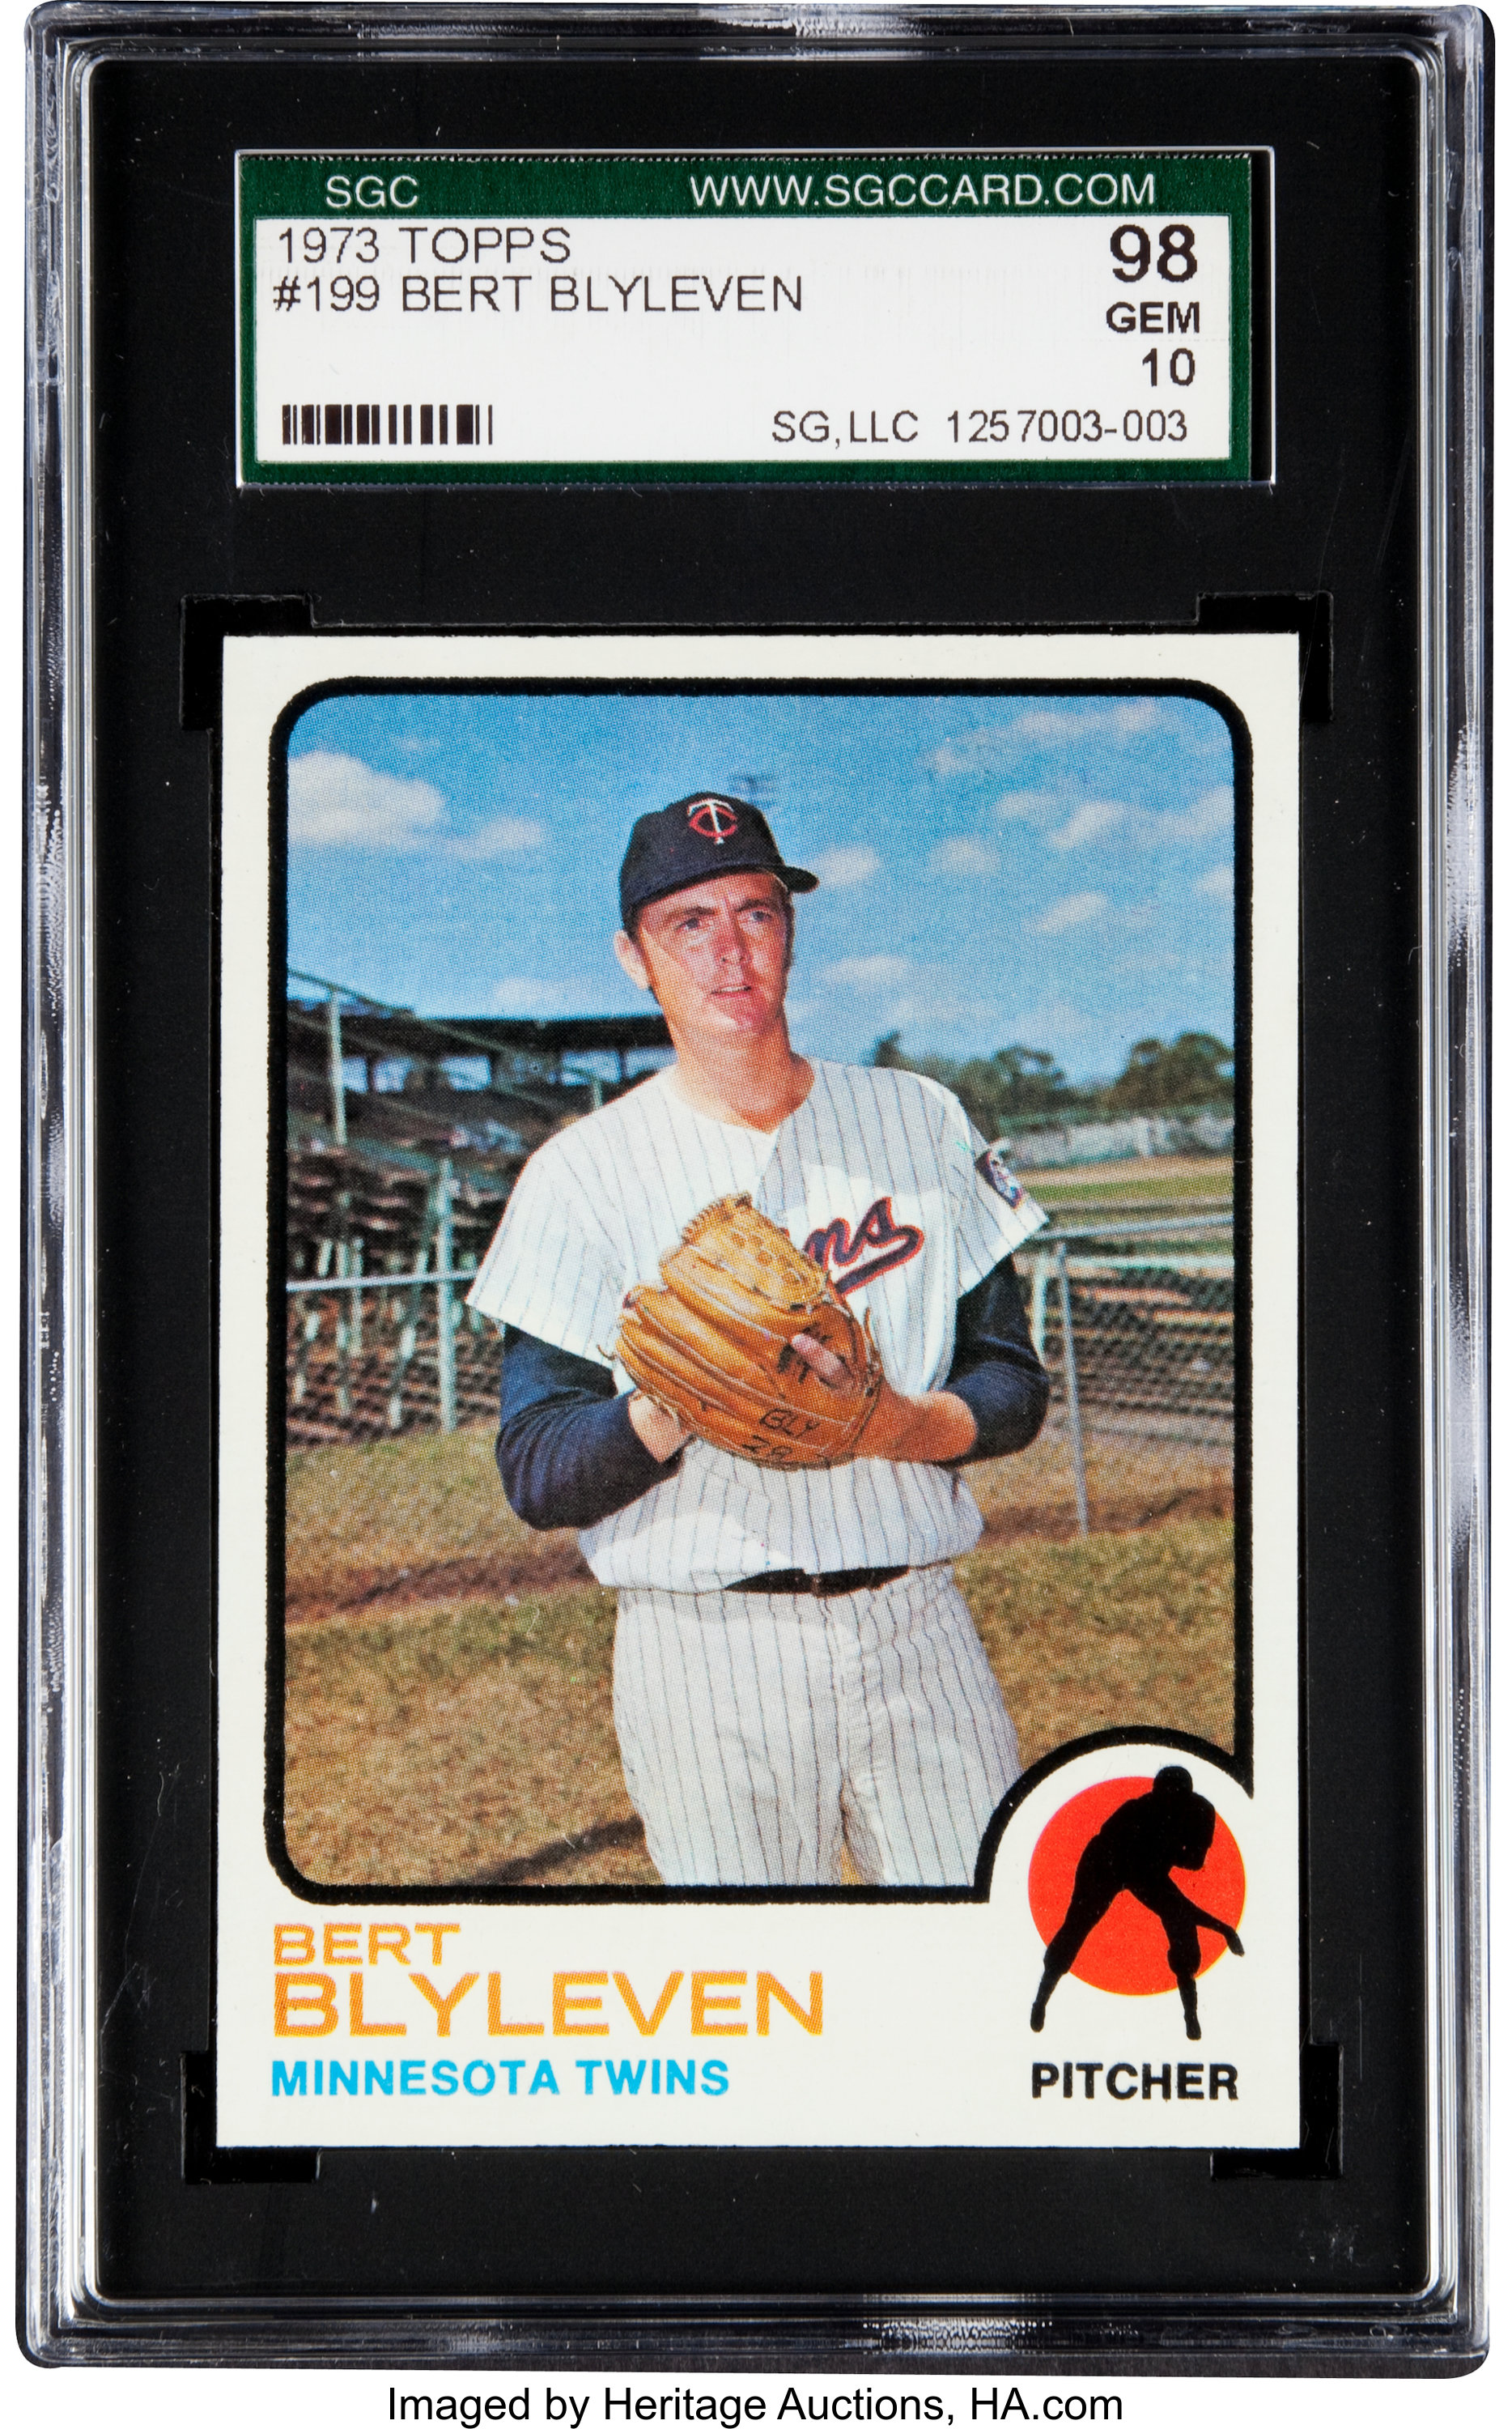 At Auction: Vintage Bert Blyleven baseball card